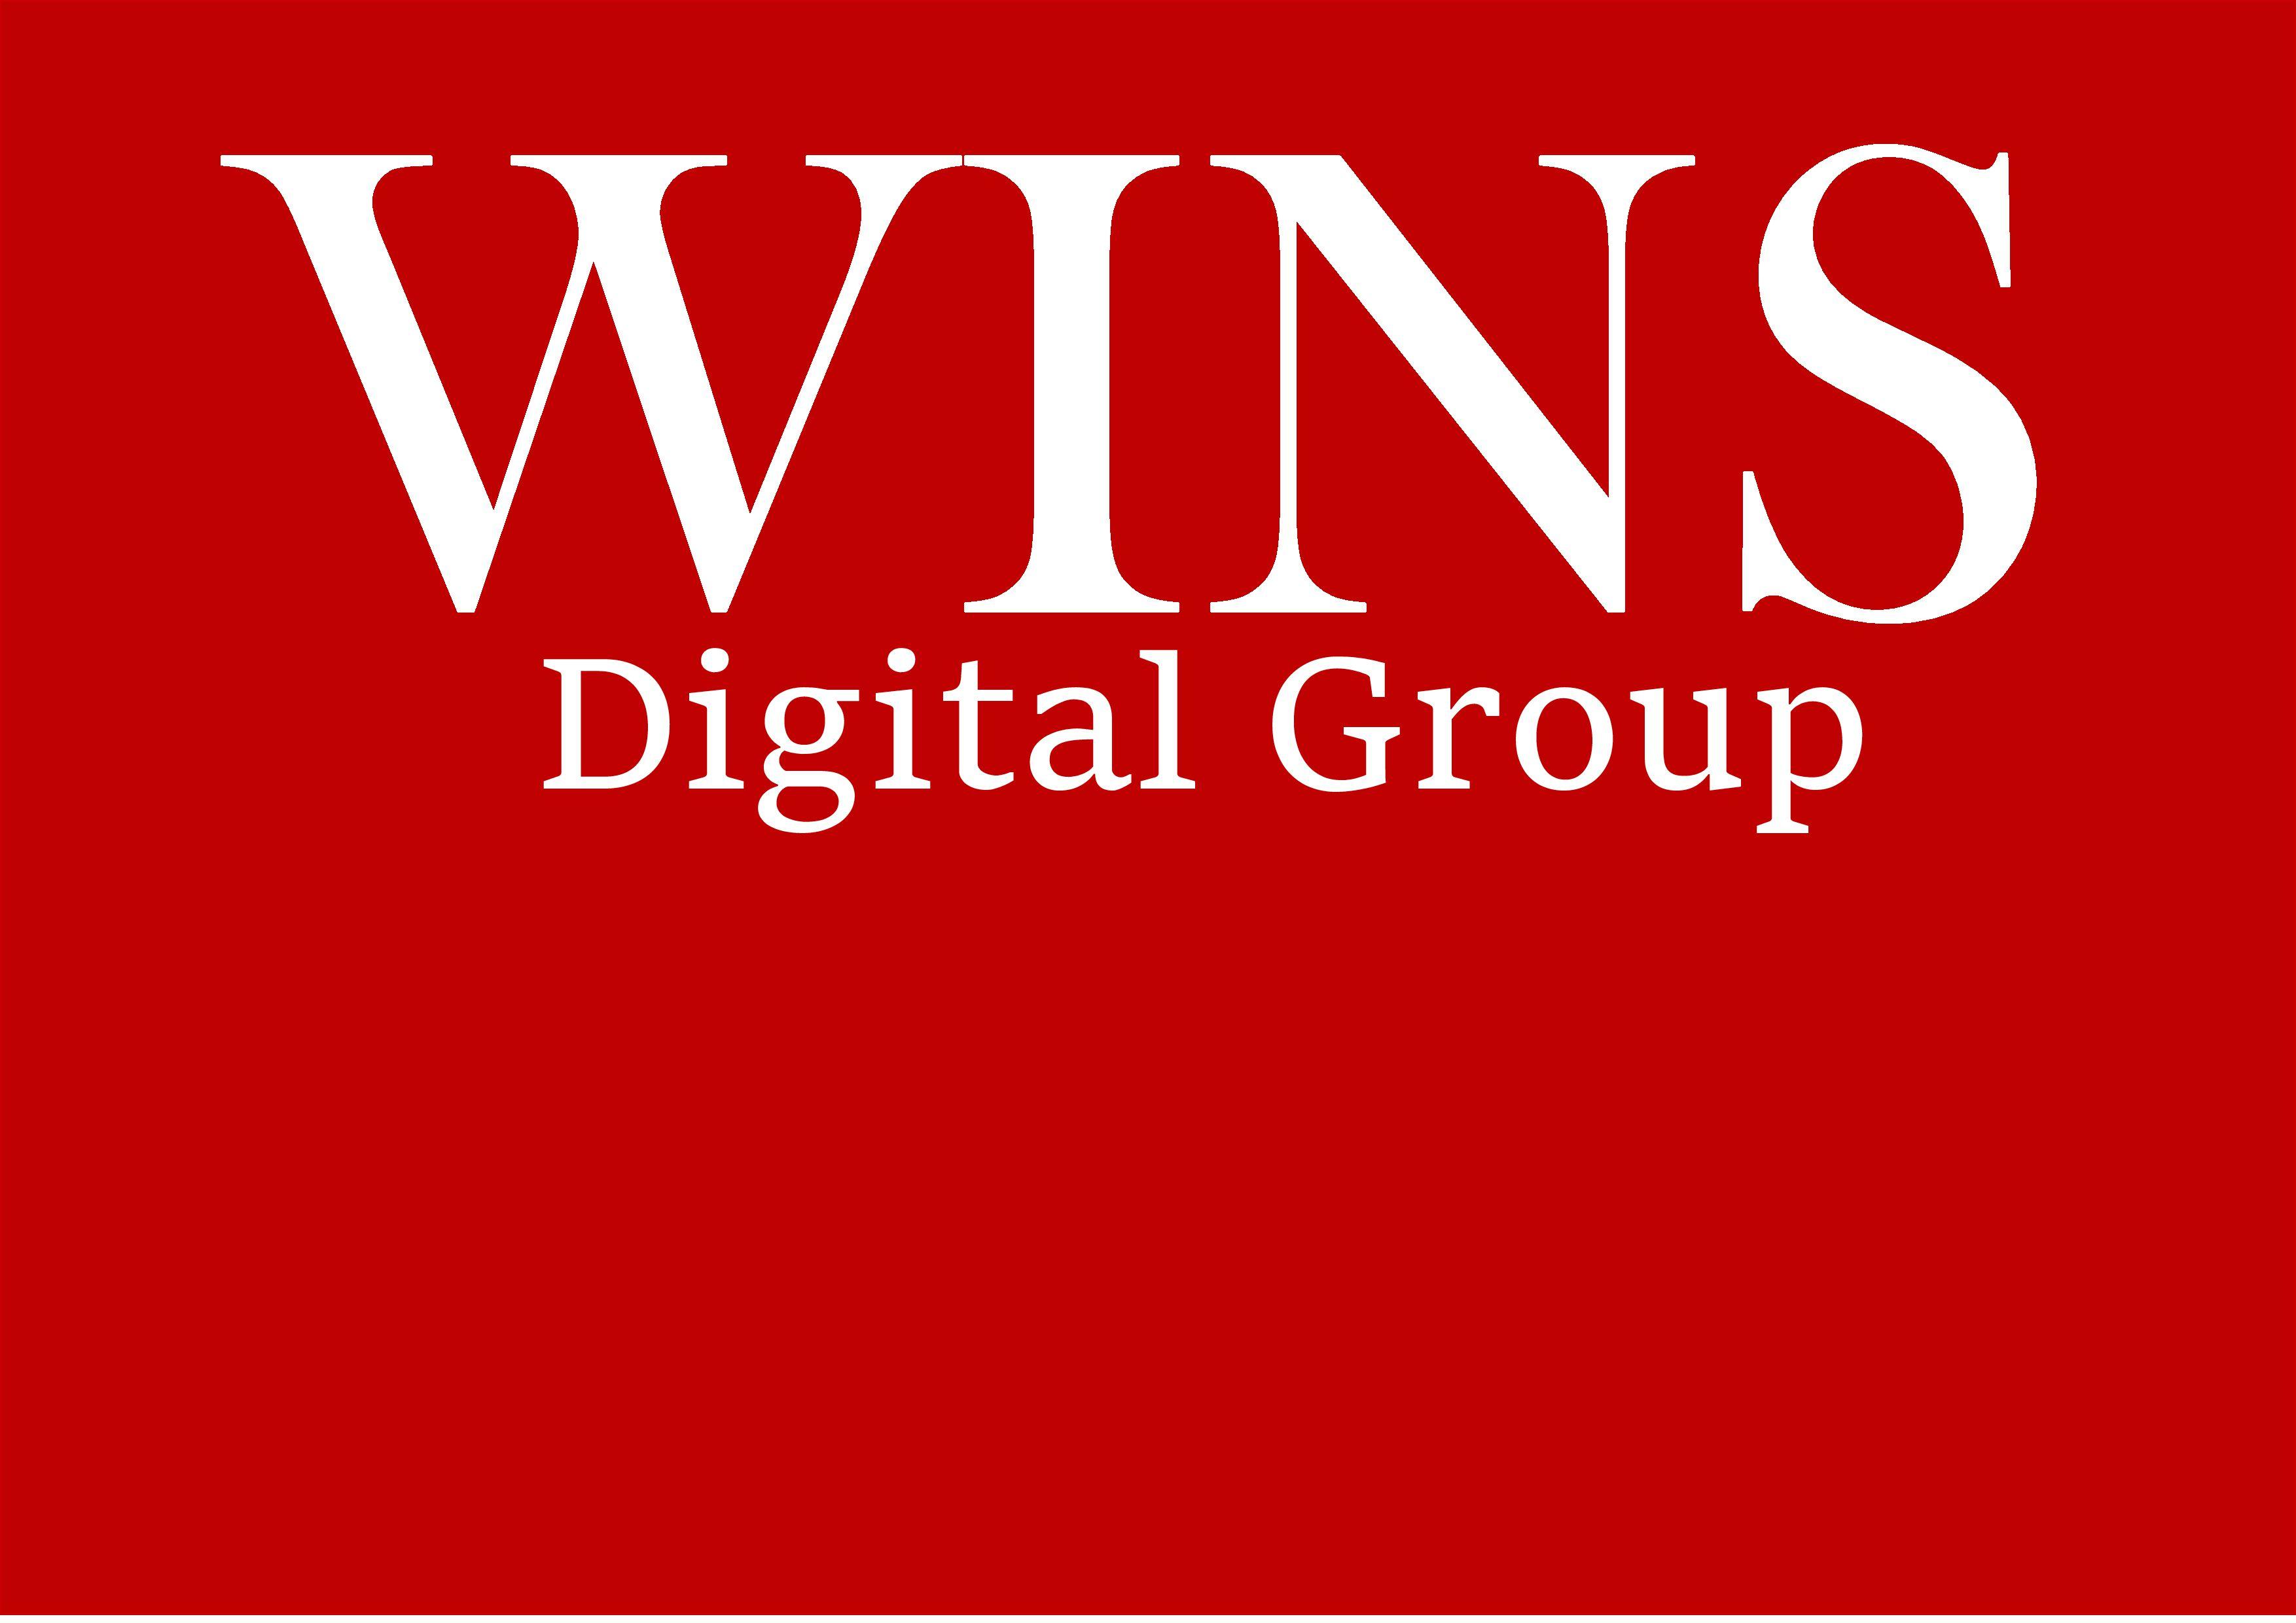 Wins Digital Group